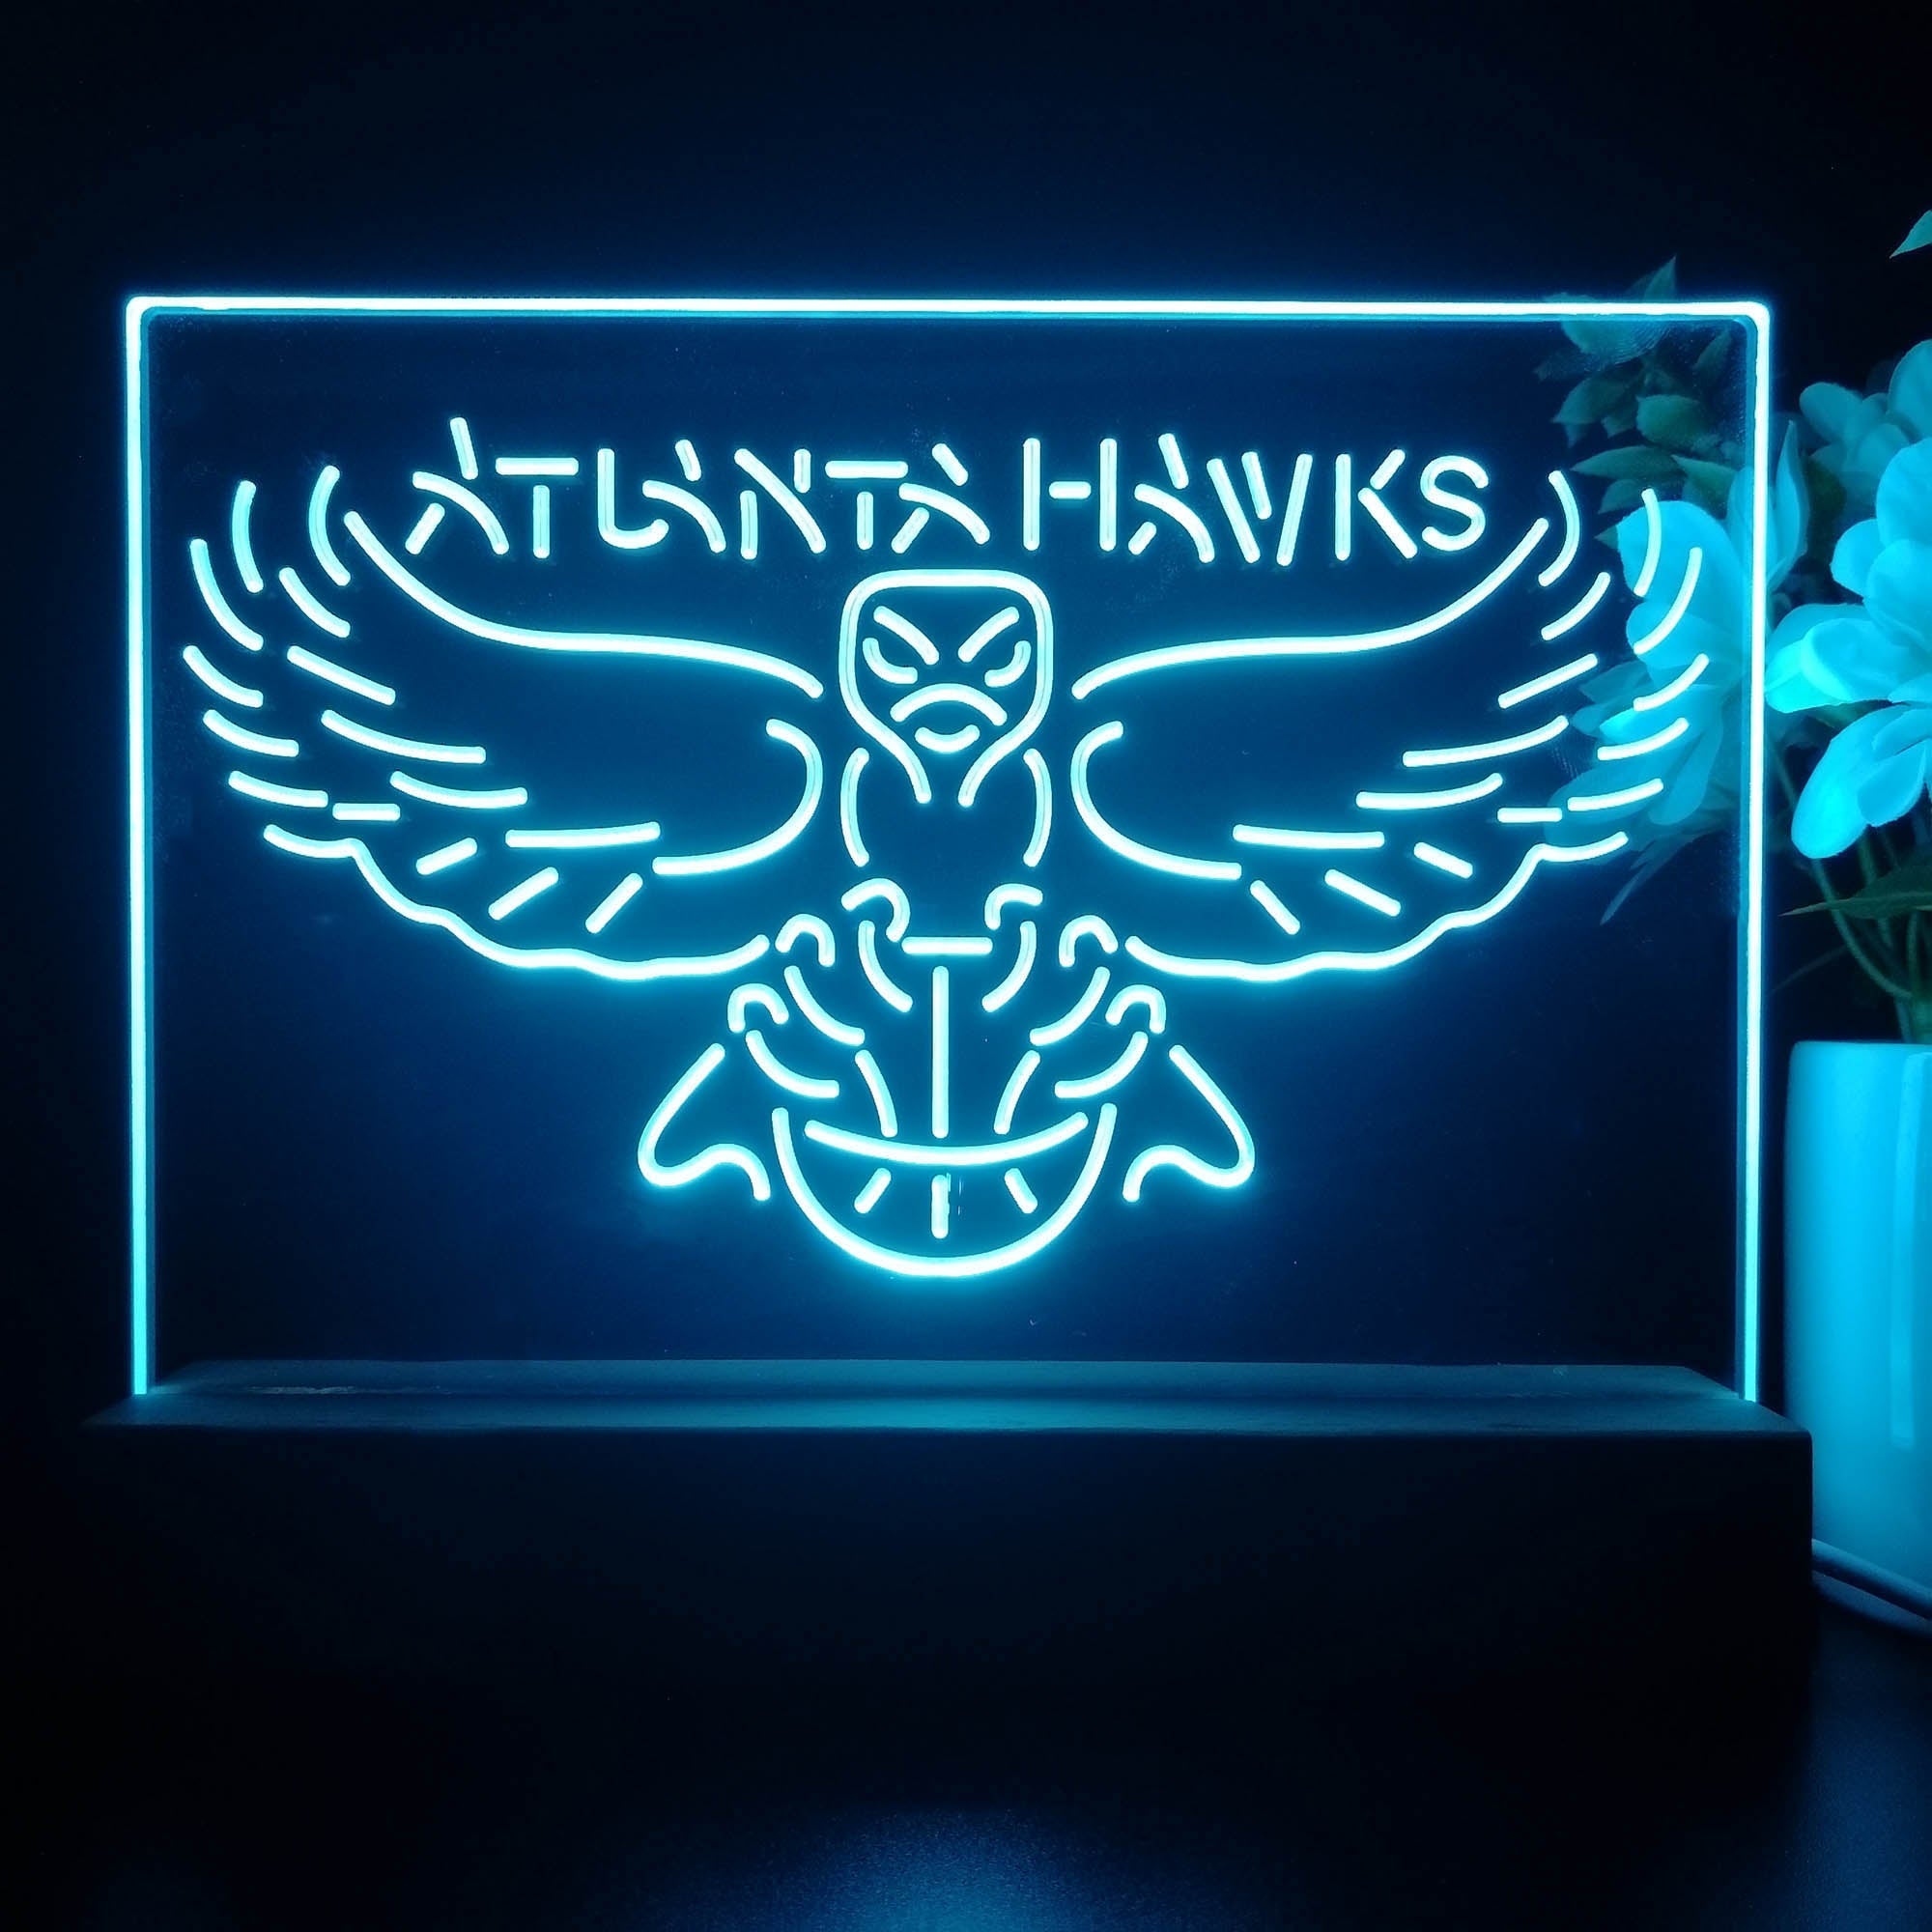 Atlanta Hawks 3D Illusion Night Light Desk Lamp